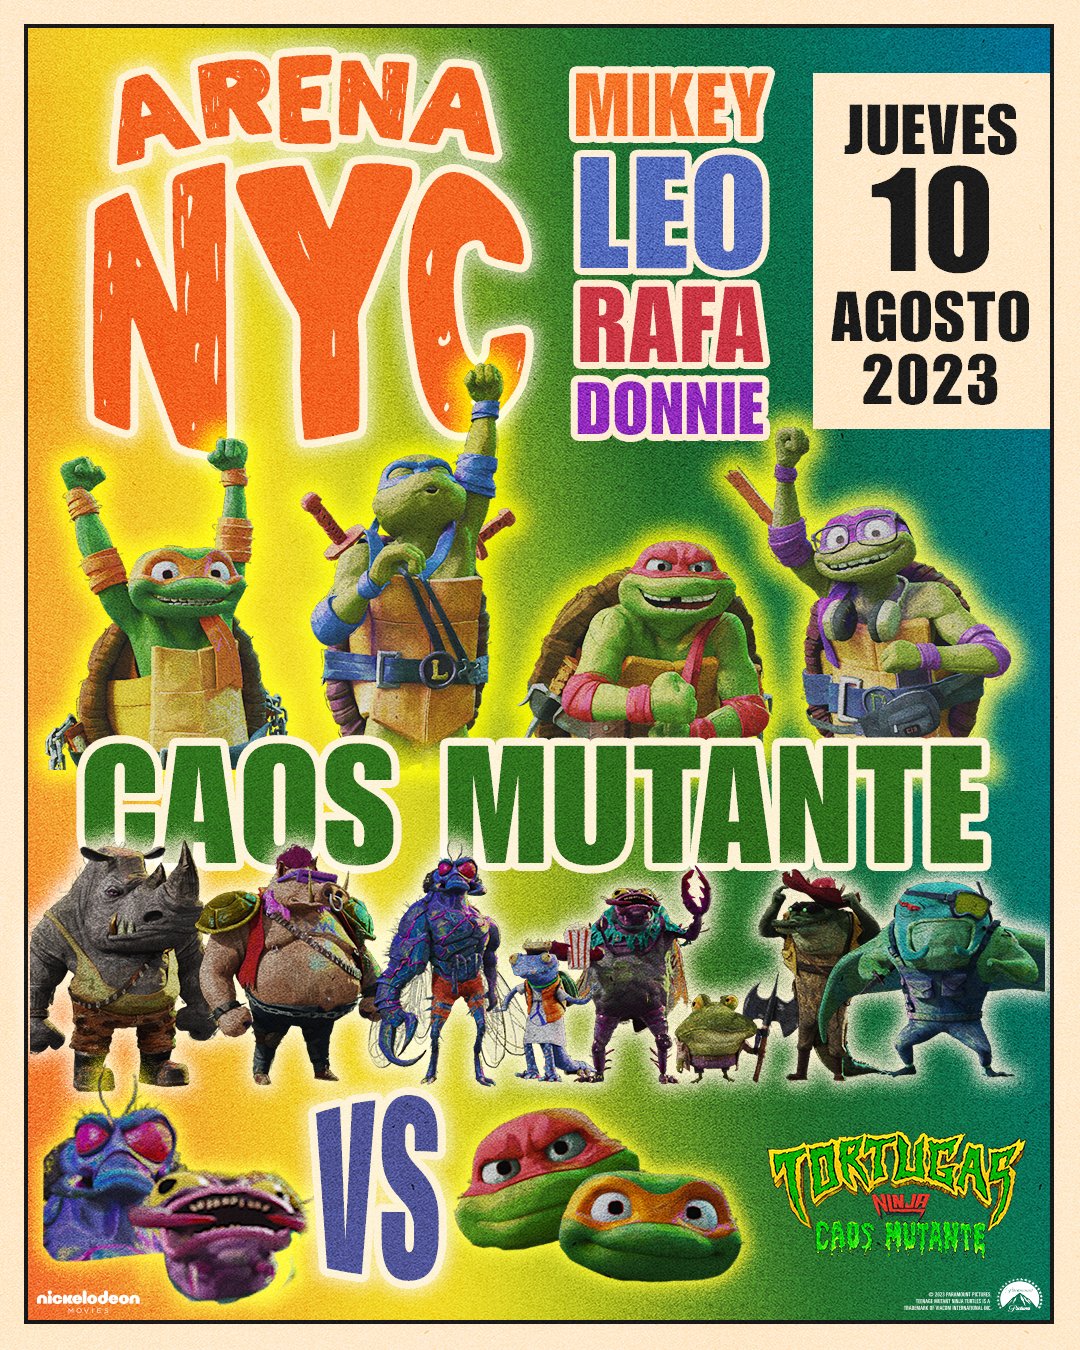 Tortugas Ninja: Caos Mutante (Poster) by matuta2002 on DeviantArt